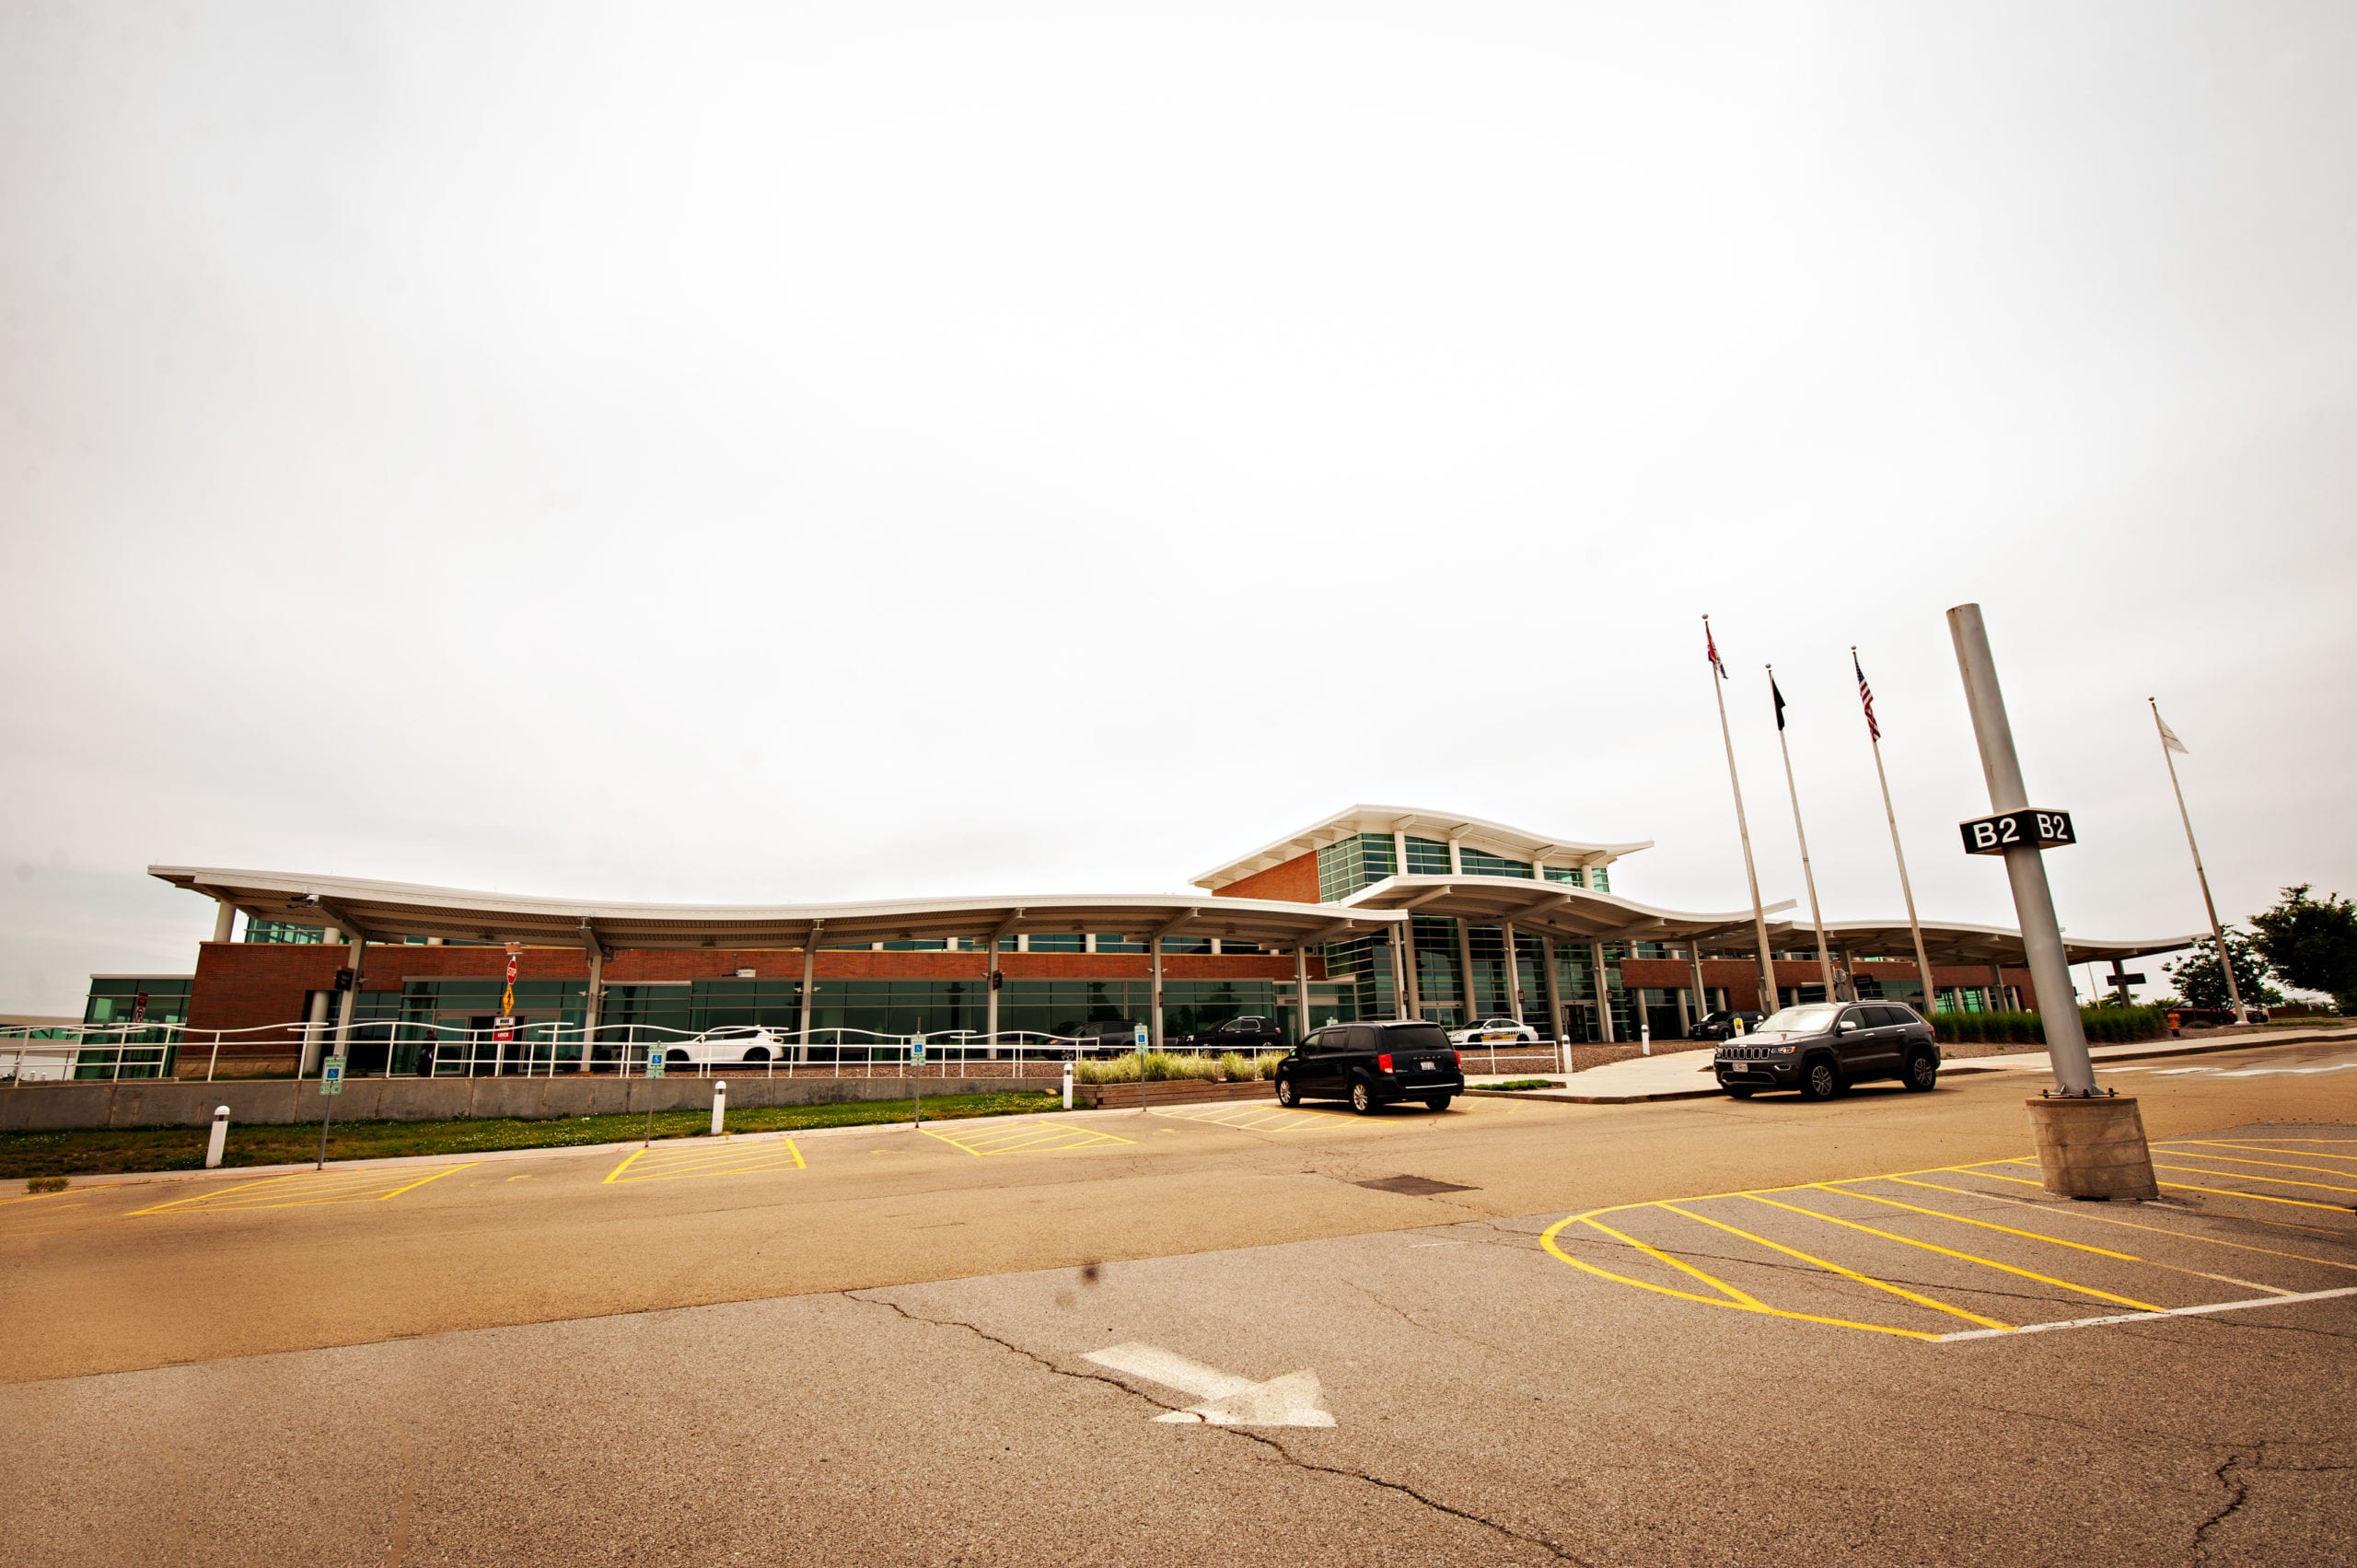 Peoria International Airport